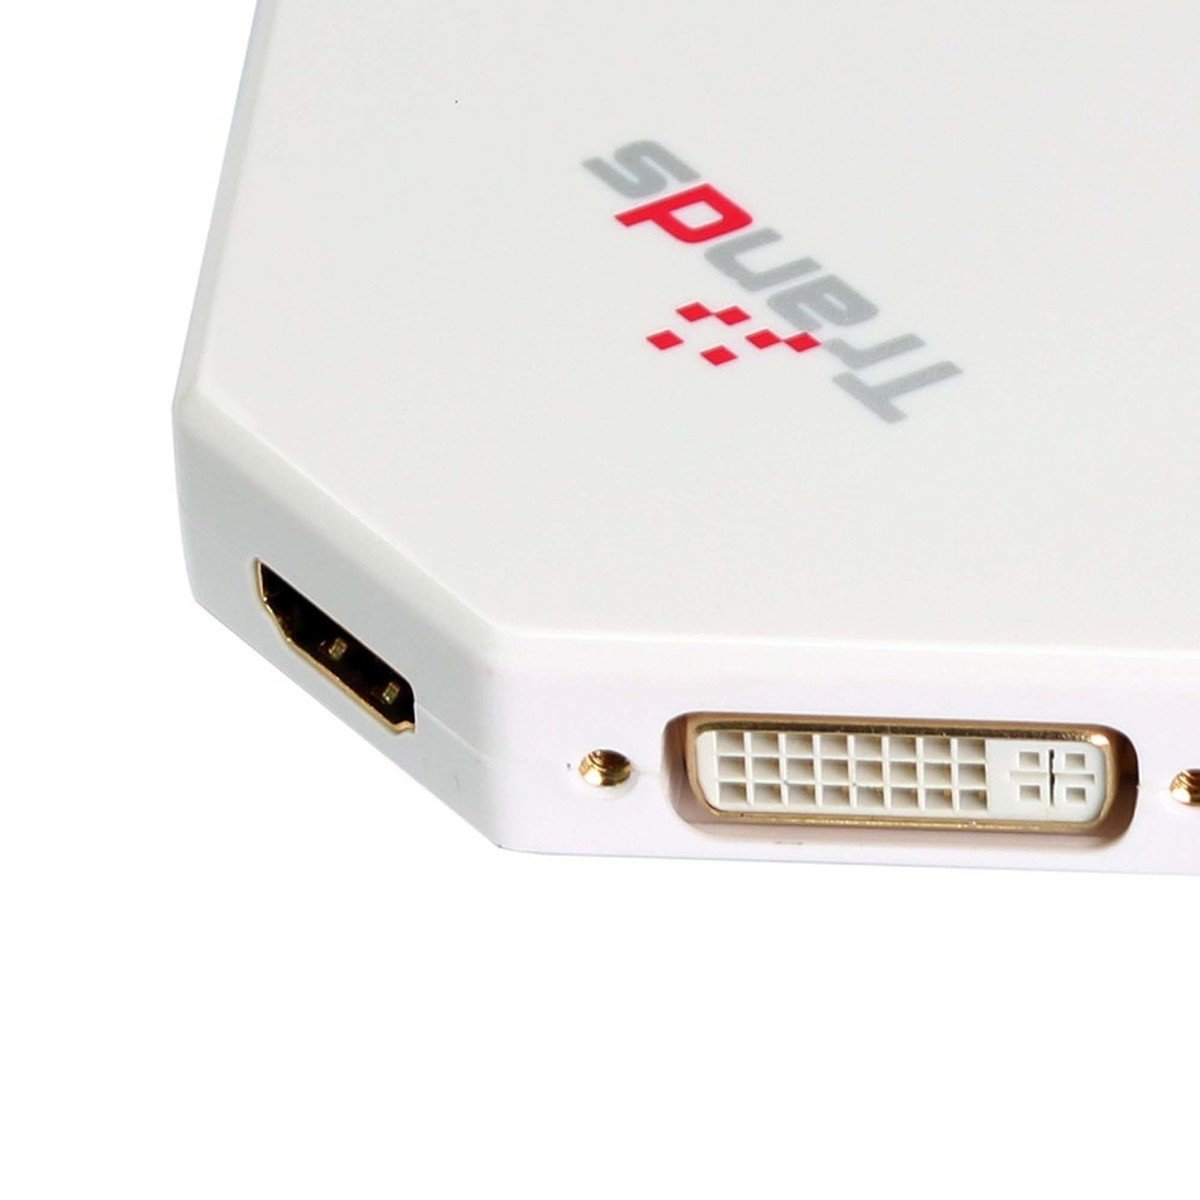 Trands Mini Display Port To HDMI VGA And DVI Female Adapter Cable CA6883